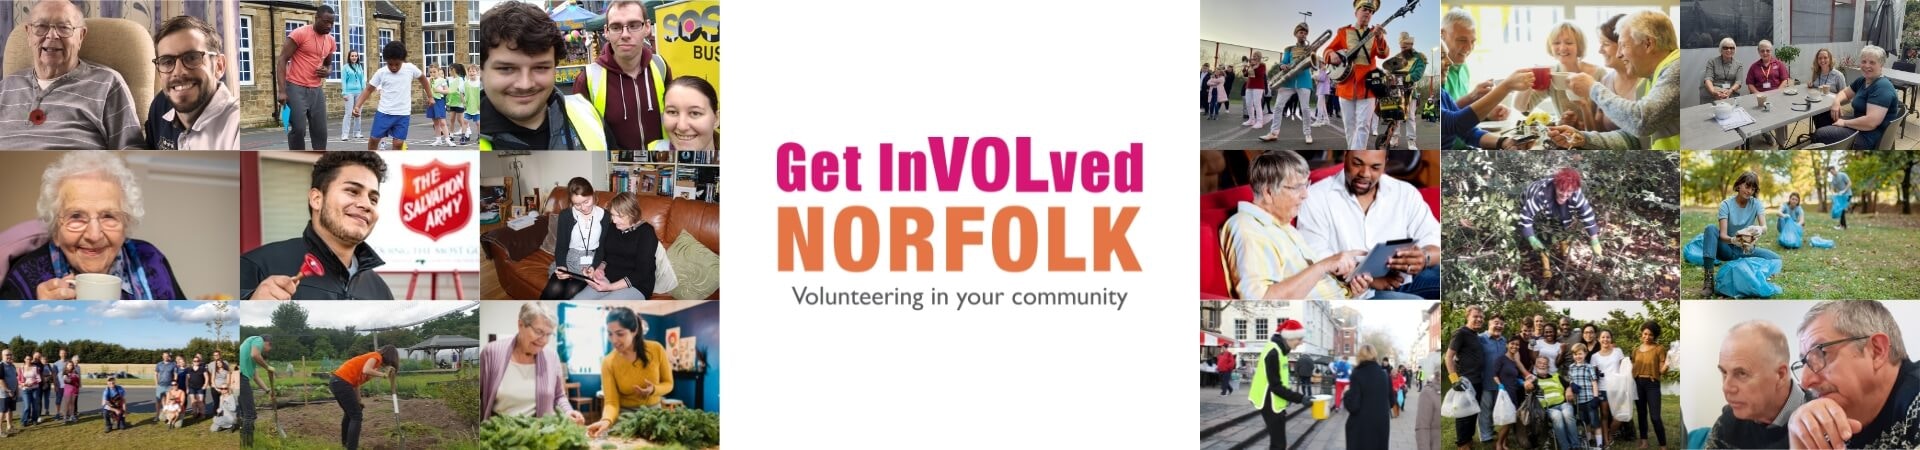 Get Involved Norfolk in large letters 